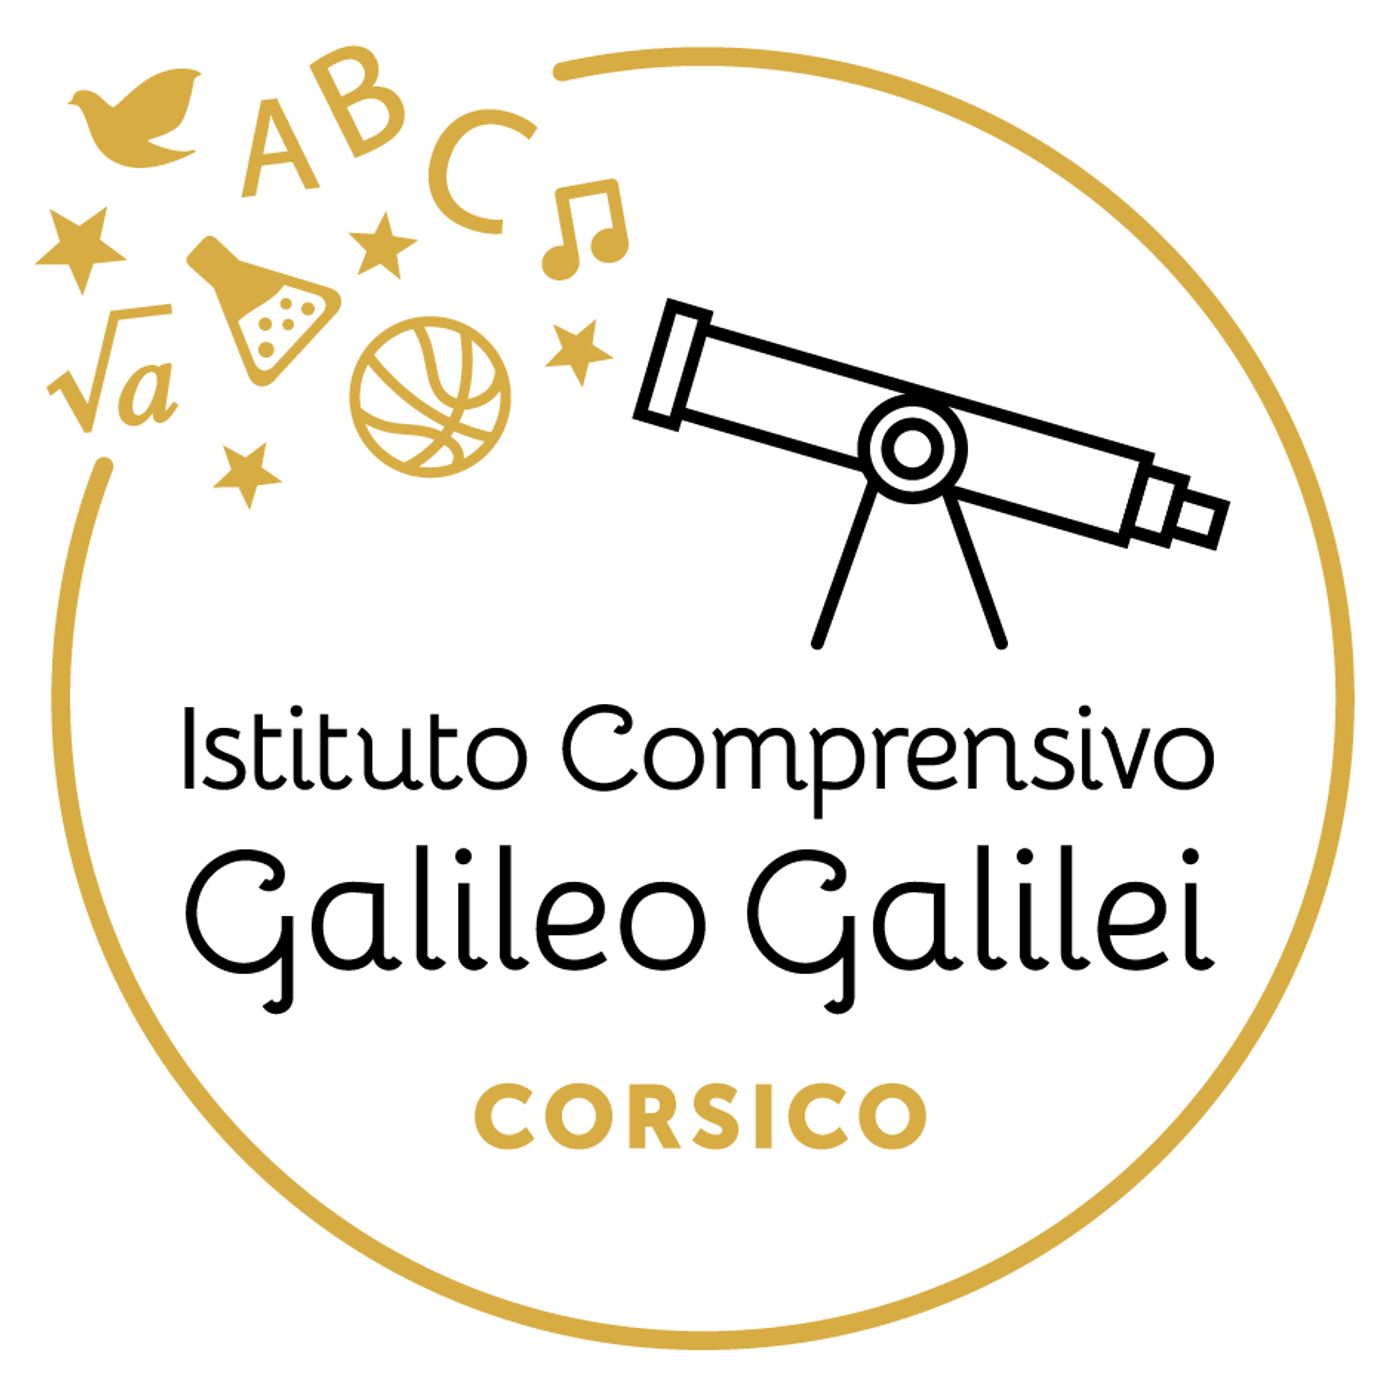 Le Voci | "Galilei" | Corsico